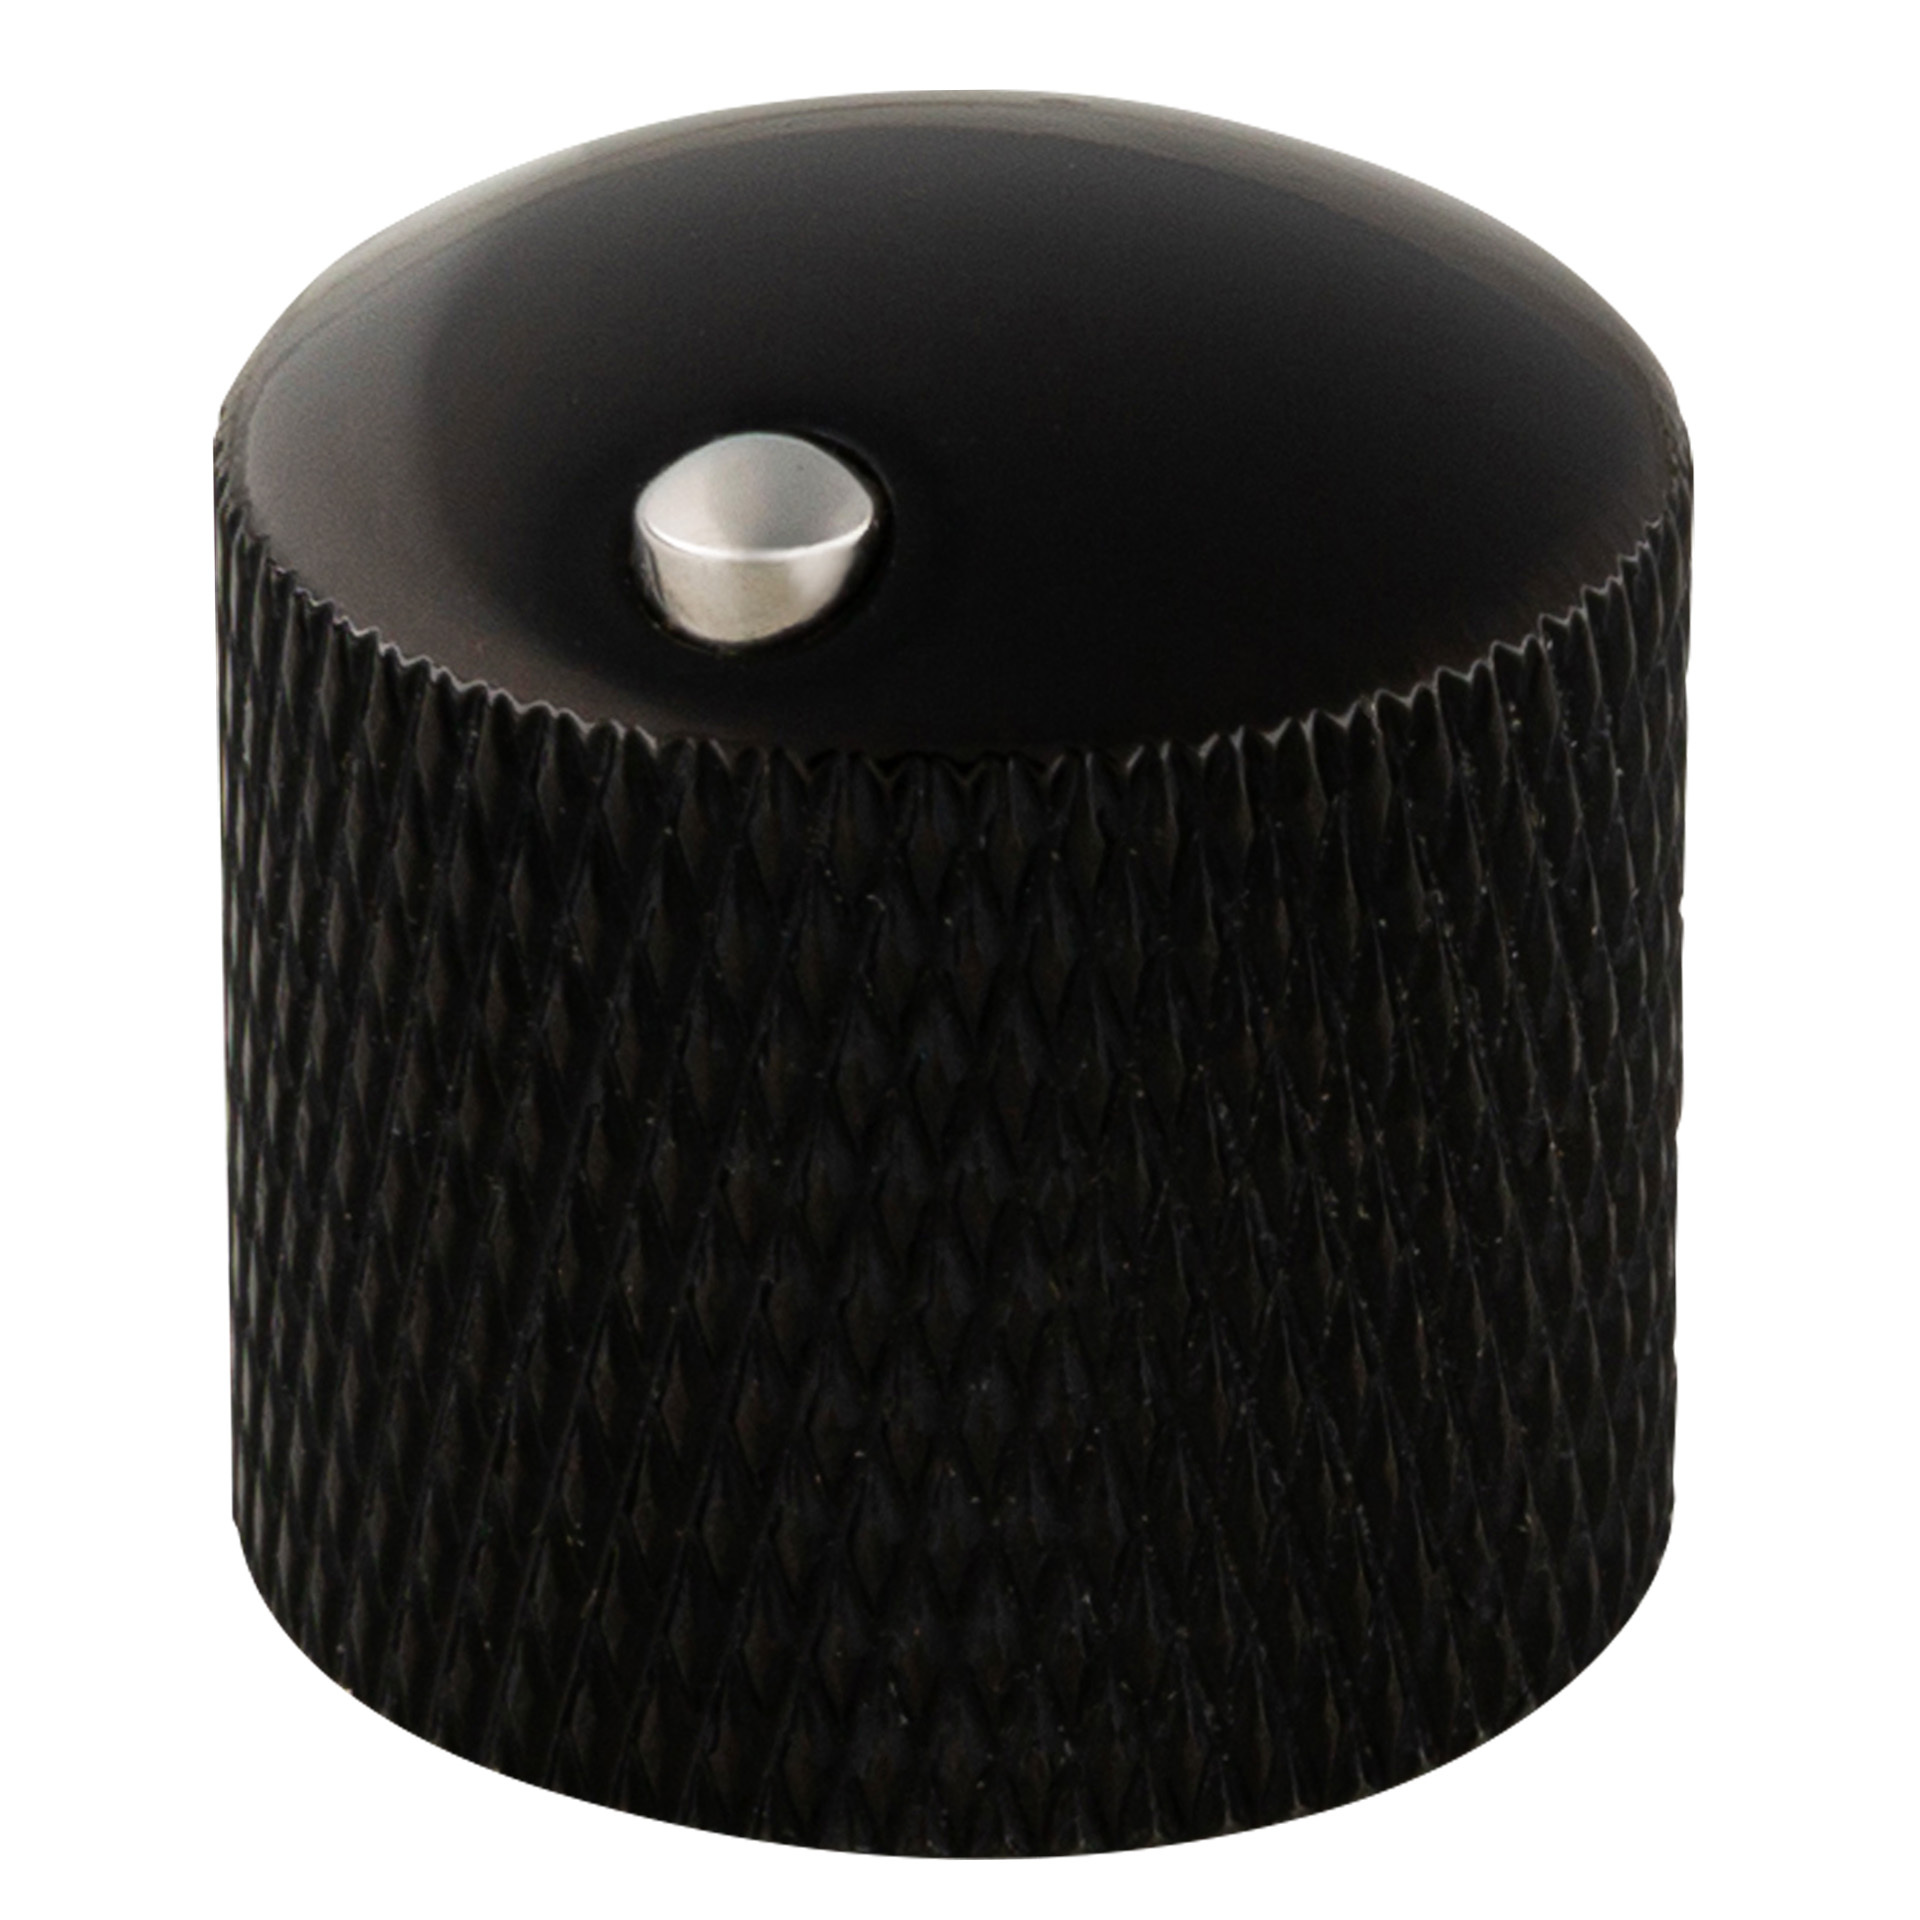 Framus & Warwick - Potentiometer Dome Knob with Convex Indicator - Black